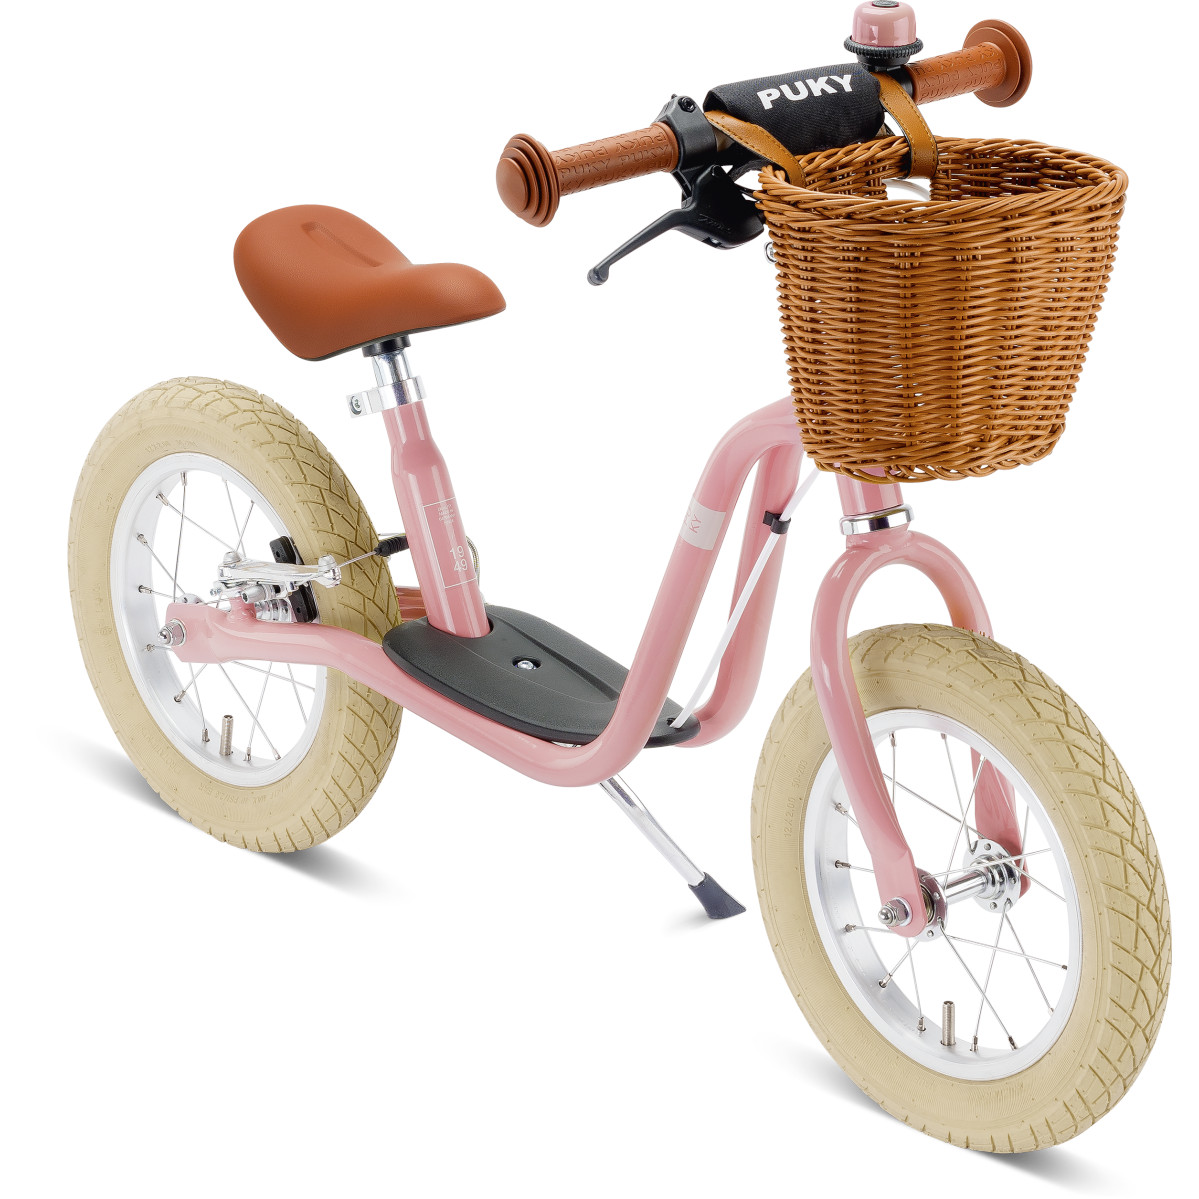 Productfoto van Puky LR XL BR Classic Balance Bike - retro-rosé